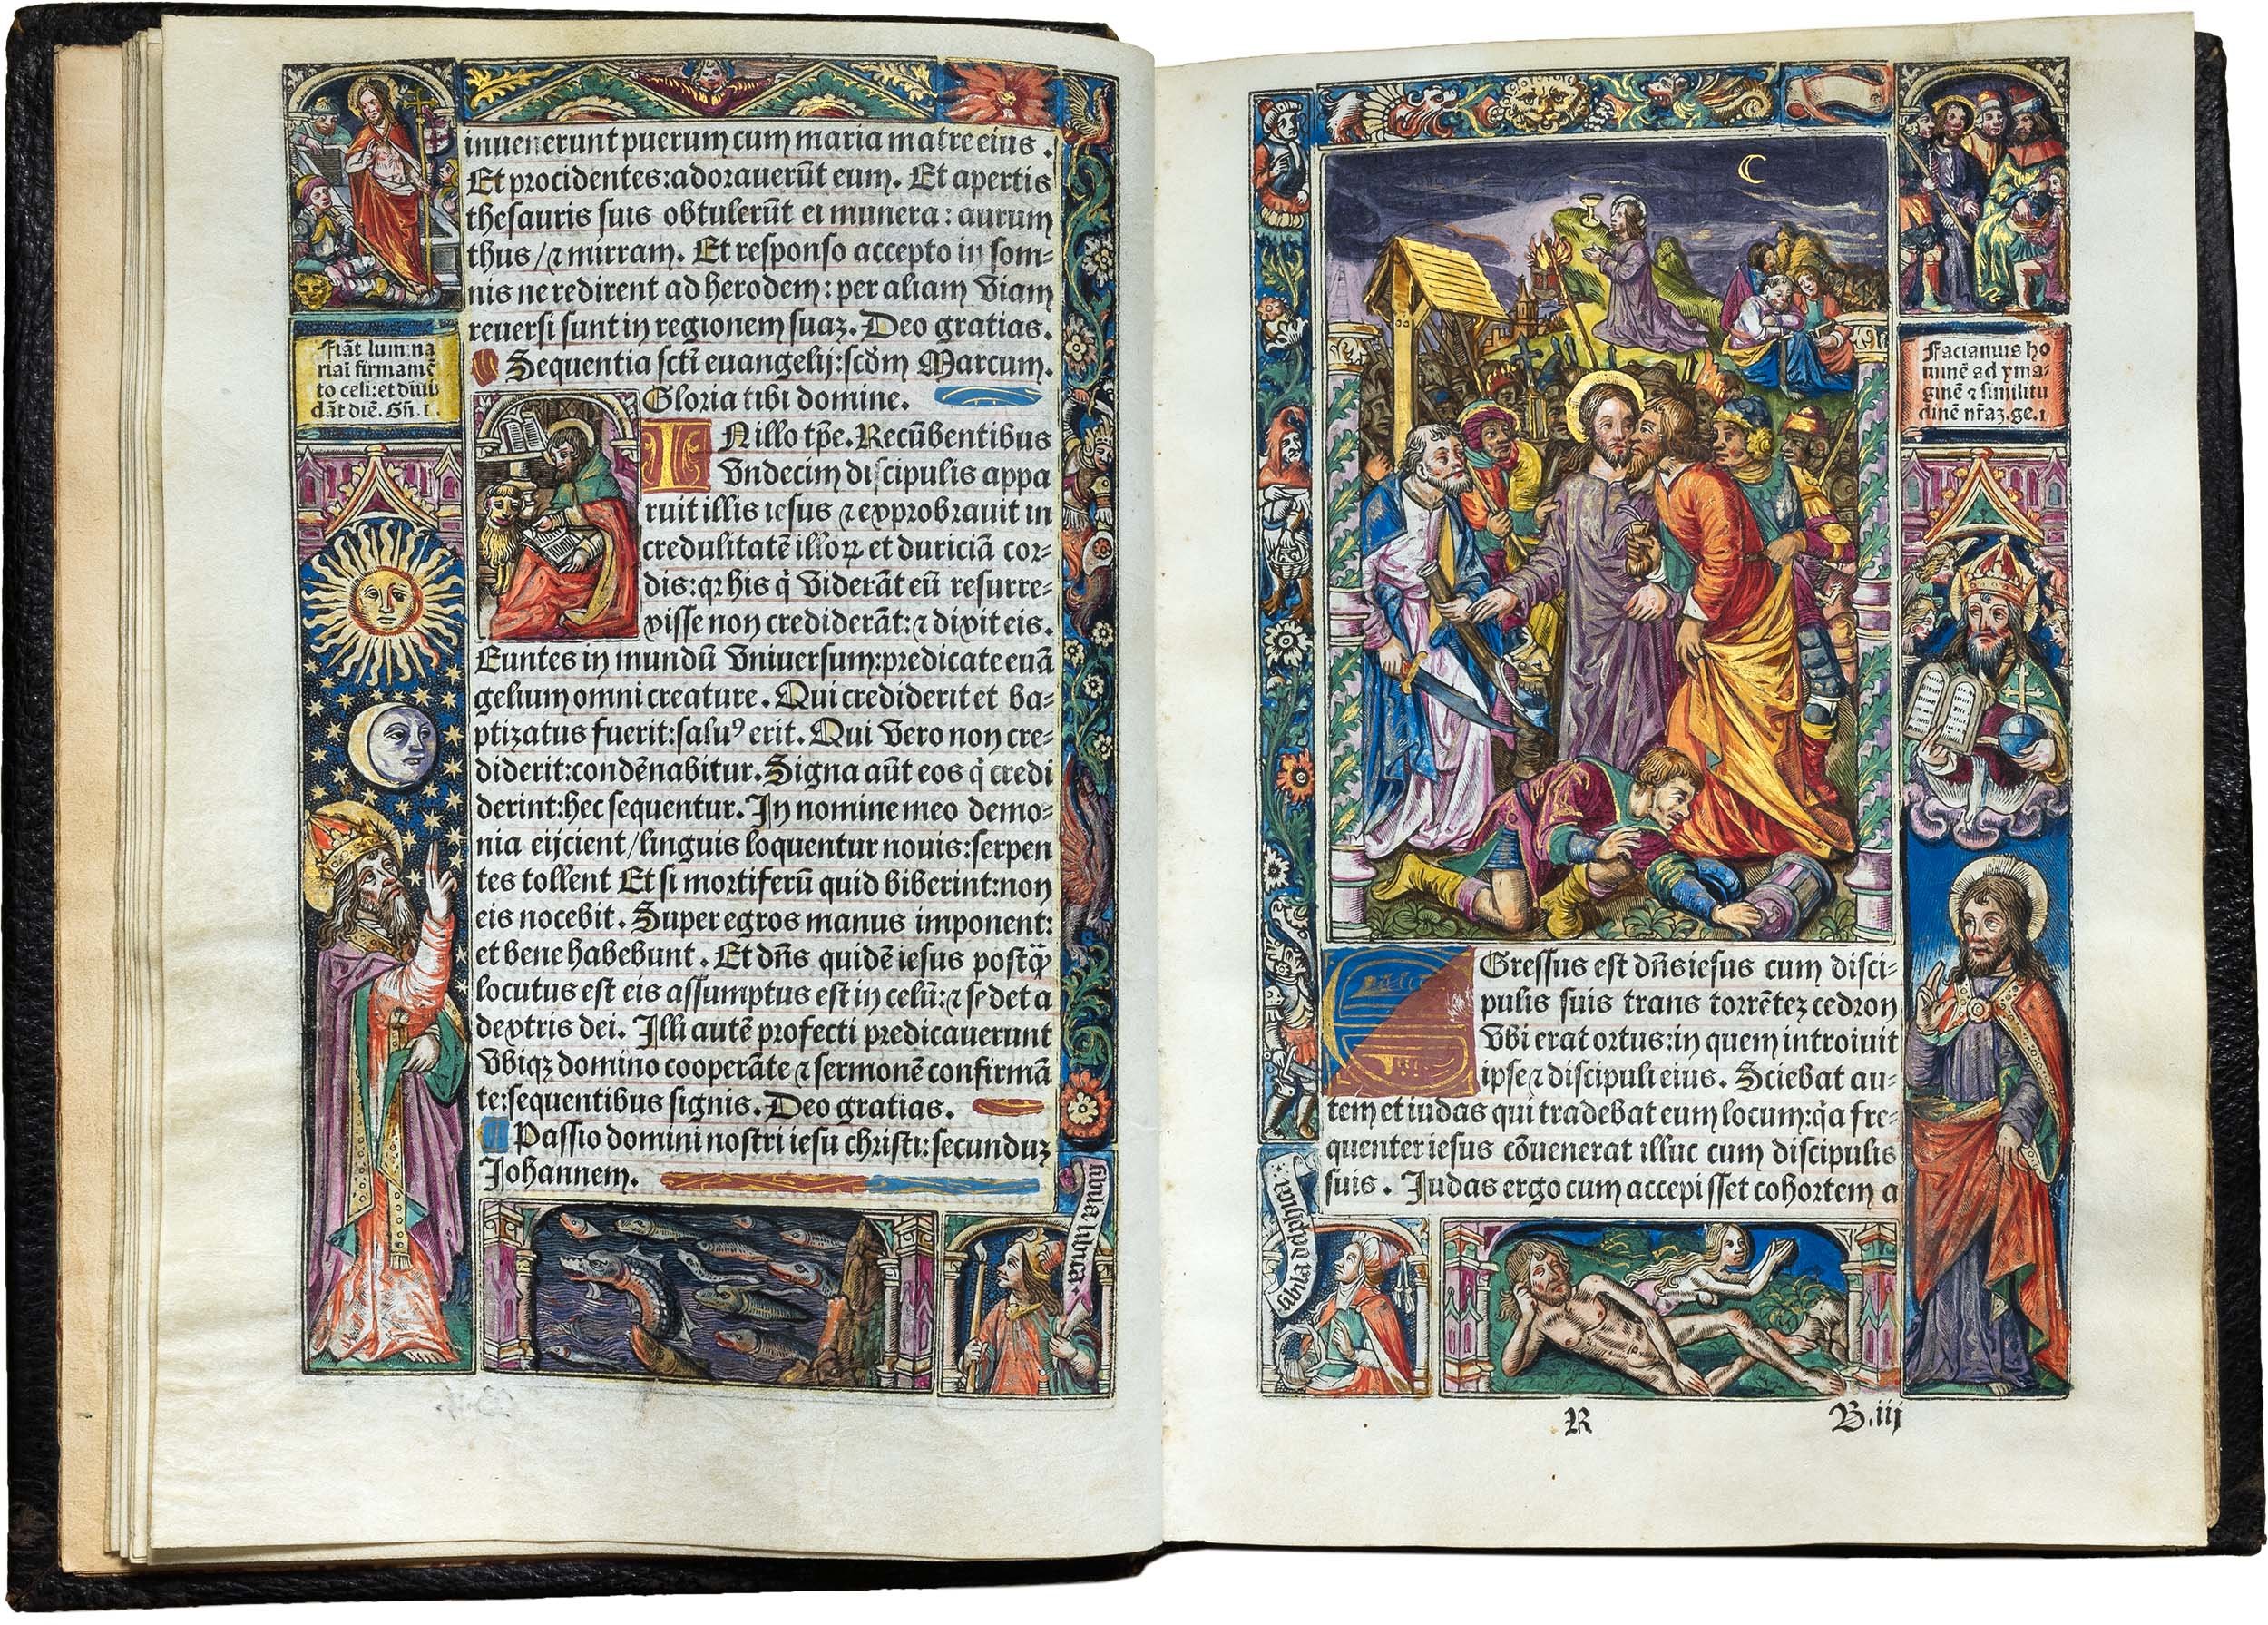 Printed-Book-of-Hours-10-january-1503-horae-bmv-kerver-remacle-illuminated-vellum-copy-schönborn-buchheim-14.jpg